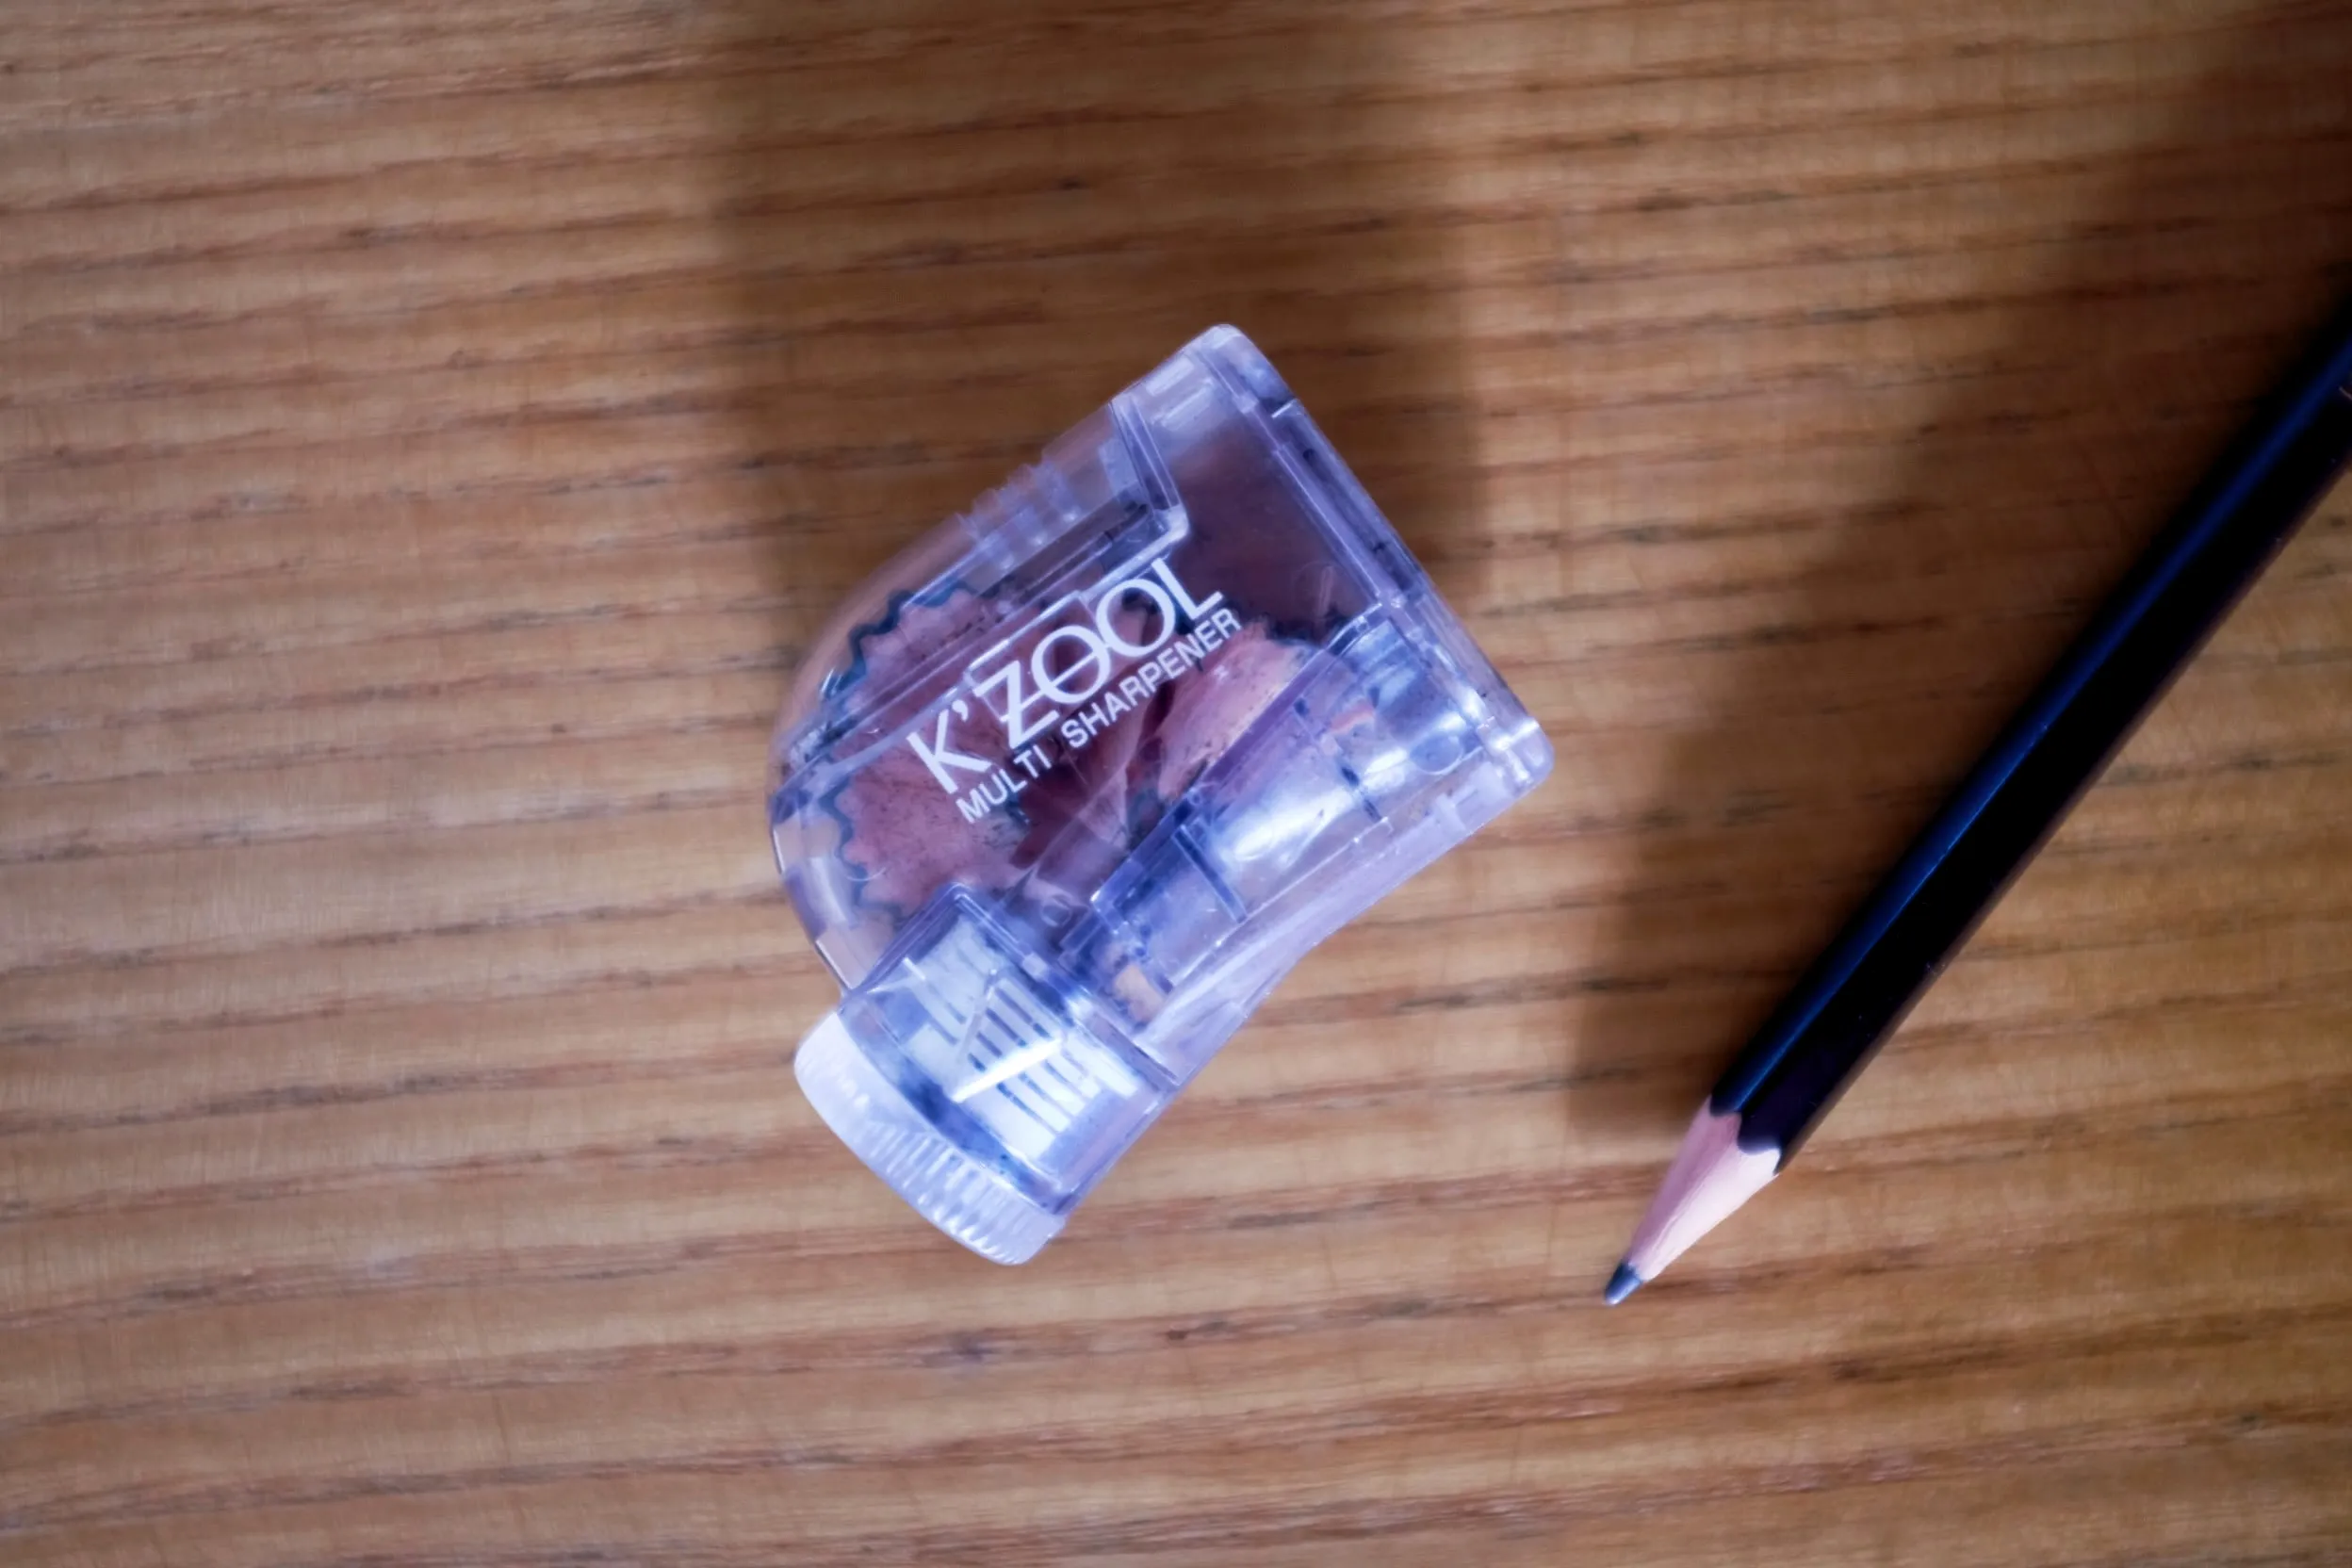 A translucent pencil sharpener